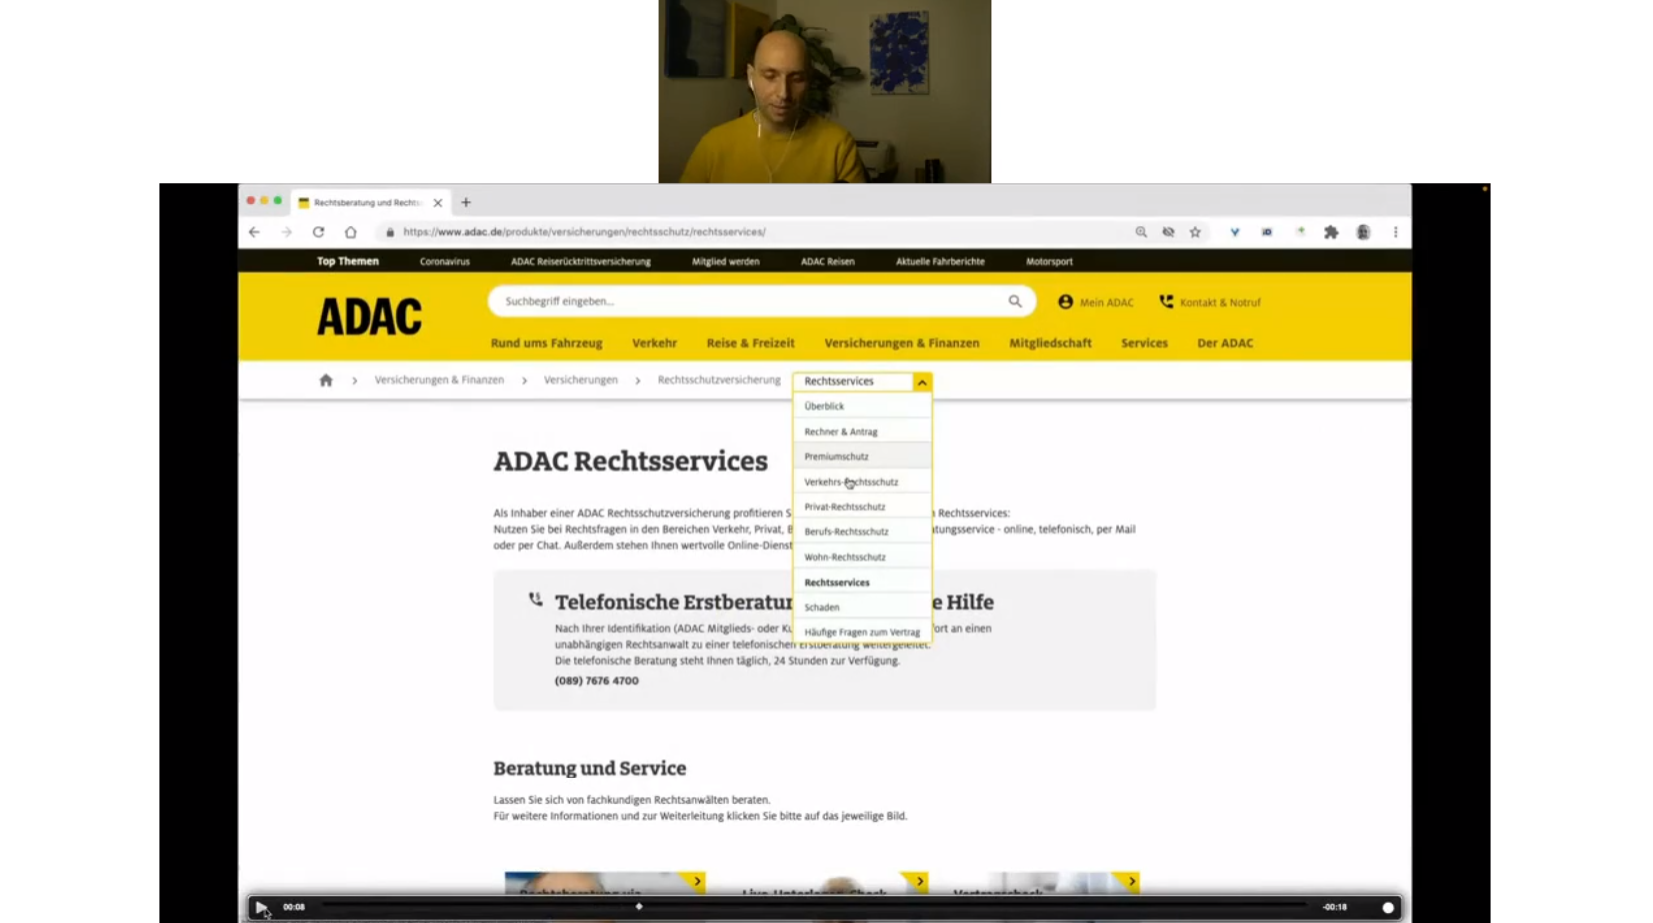 ADAC Germany website